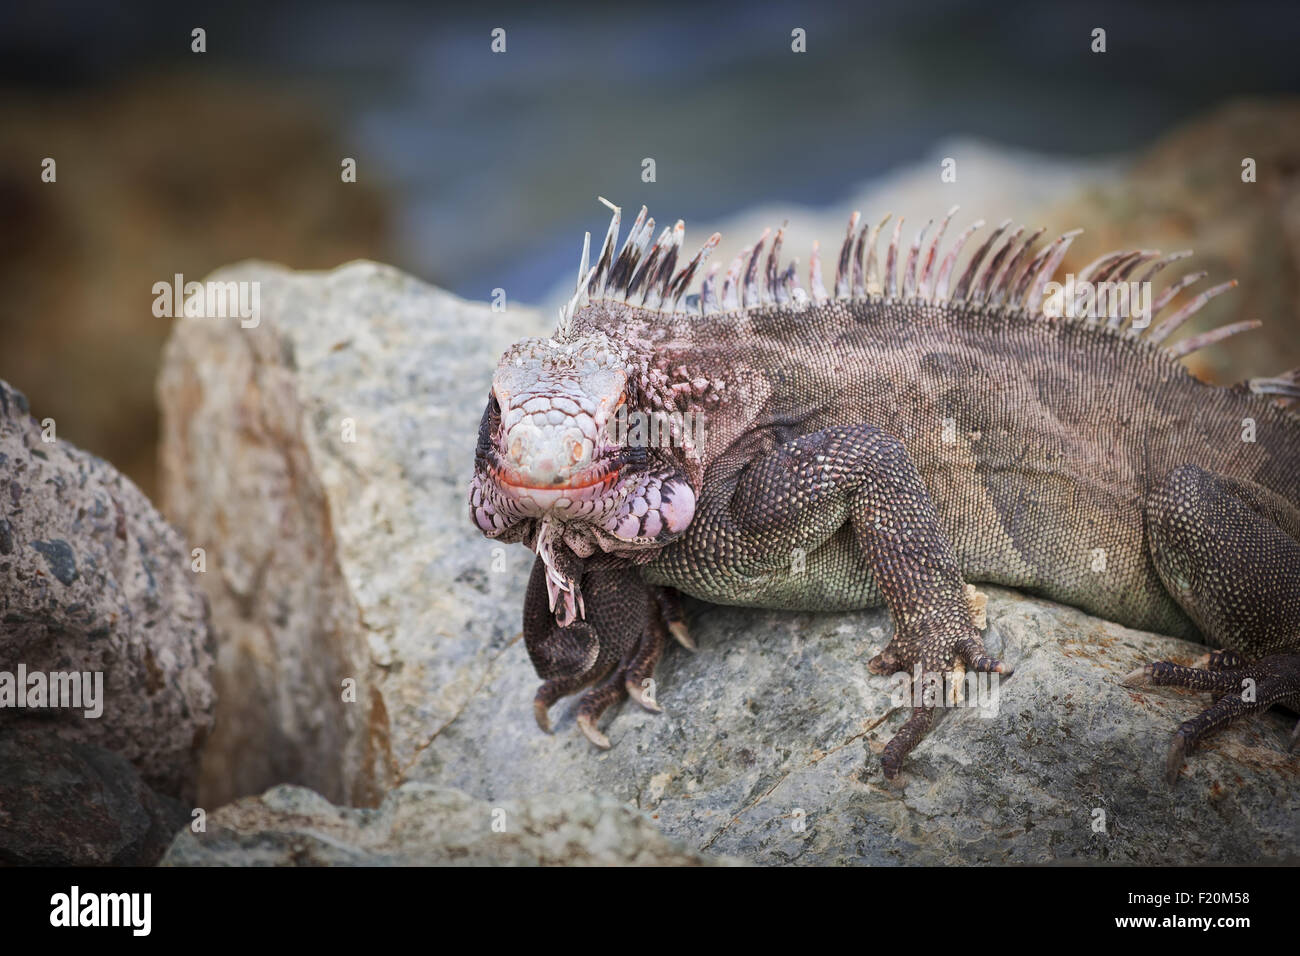 Wild Iguana on the rocks in the Caribbean island of St. Thomas Stock Photo